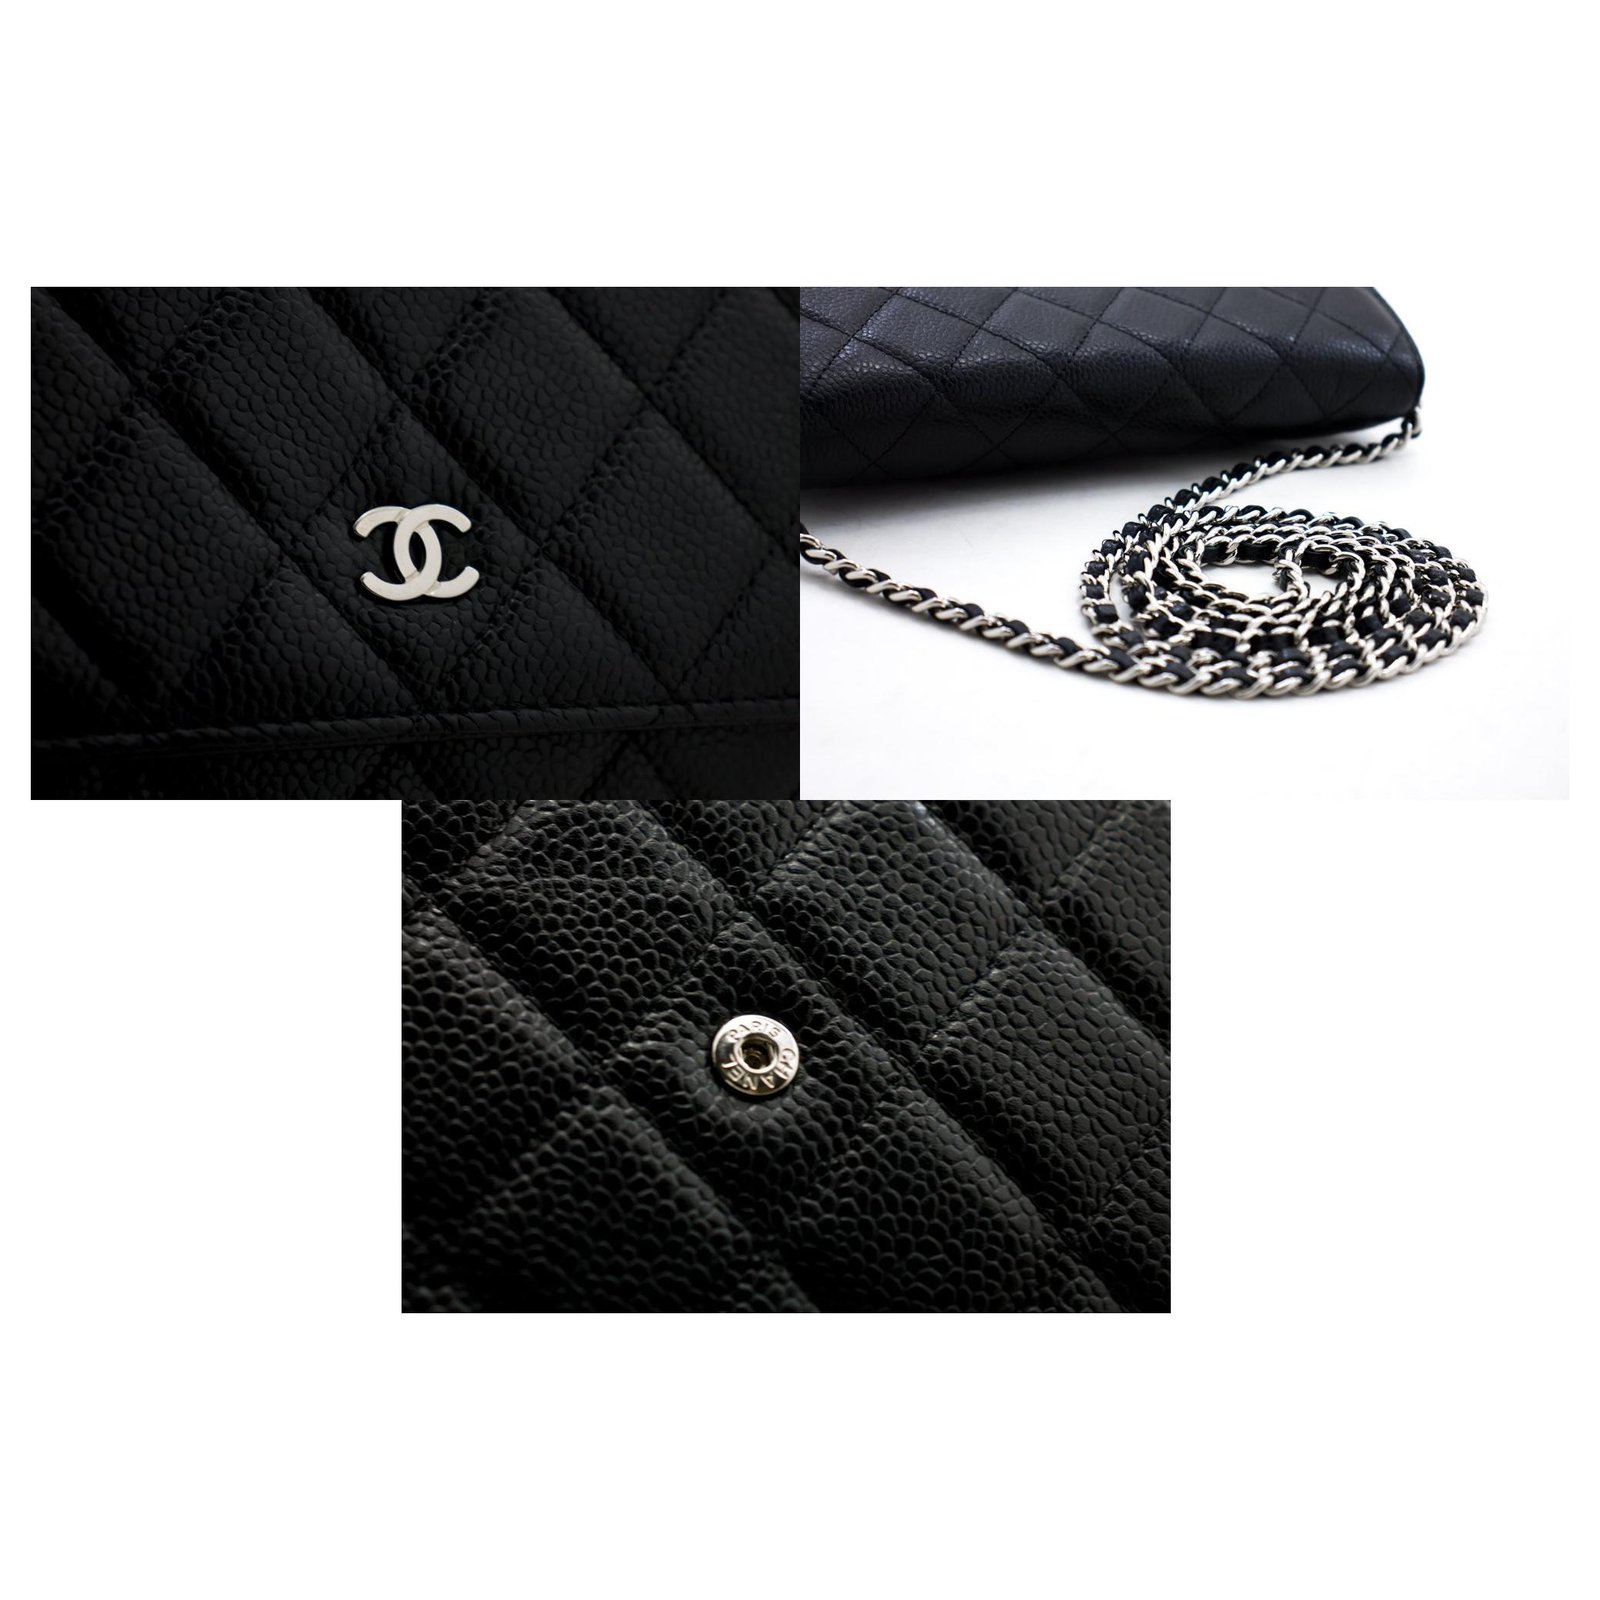 CHANEL Caviar Wallet On Chain WOC Black Shoulder Bag Crossbody